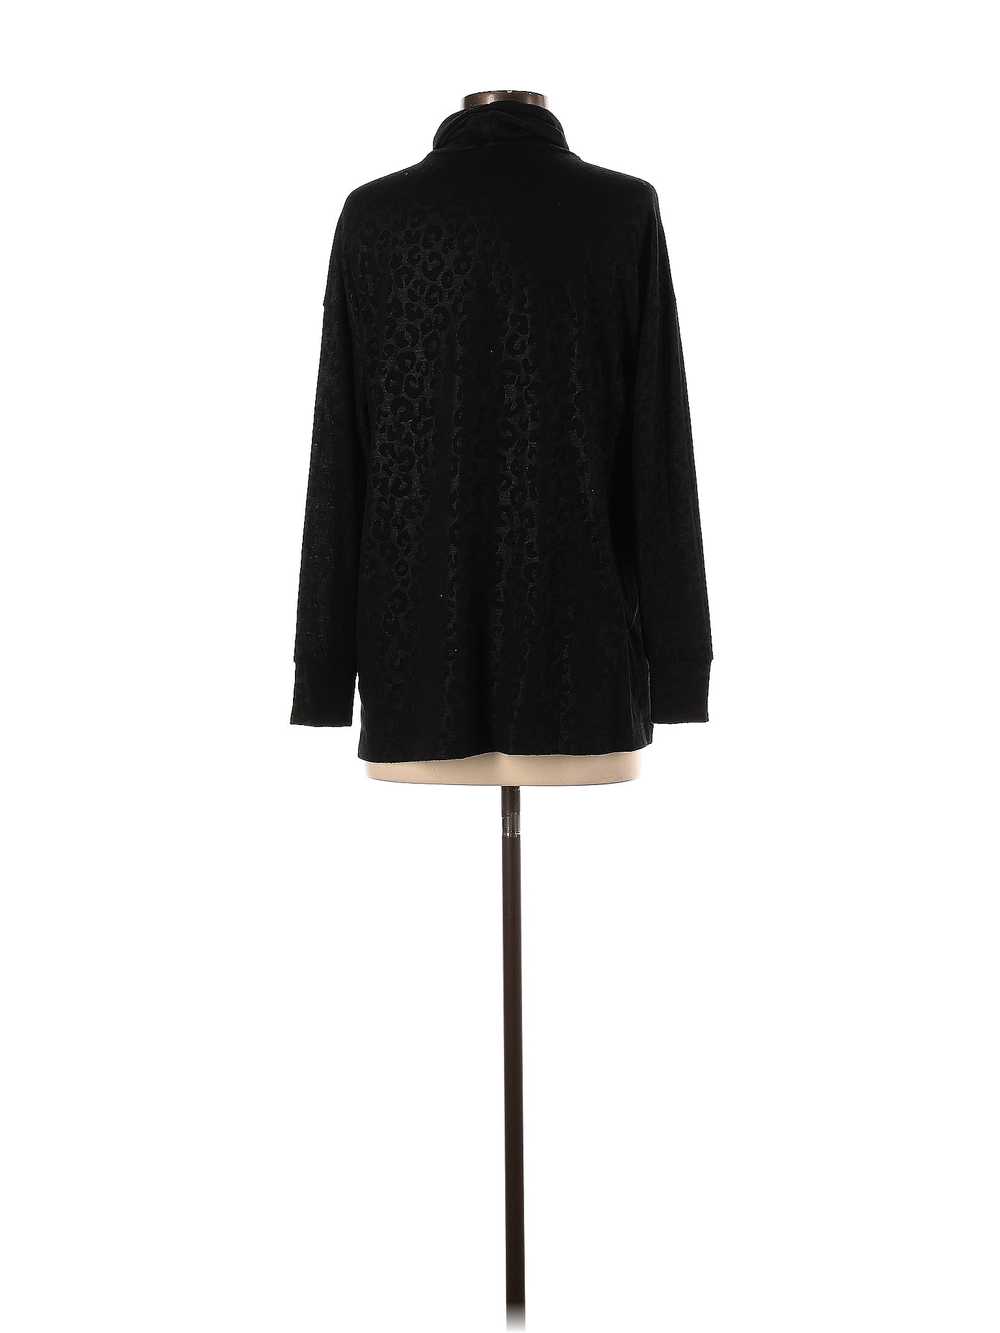 Capote Women Black Turtleneck Sweater S - image 2